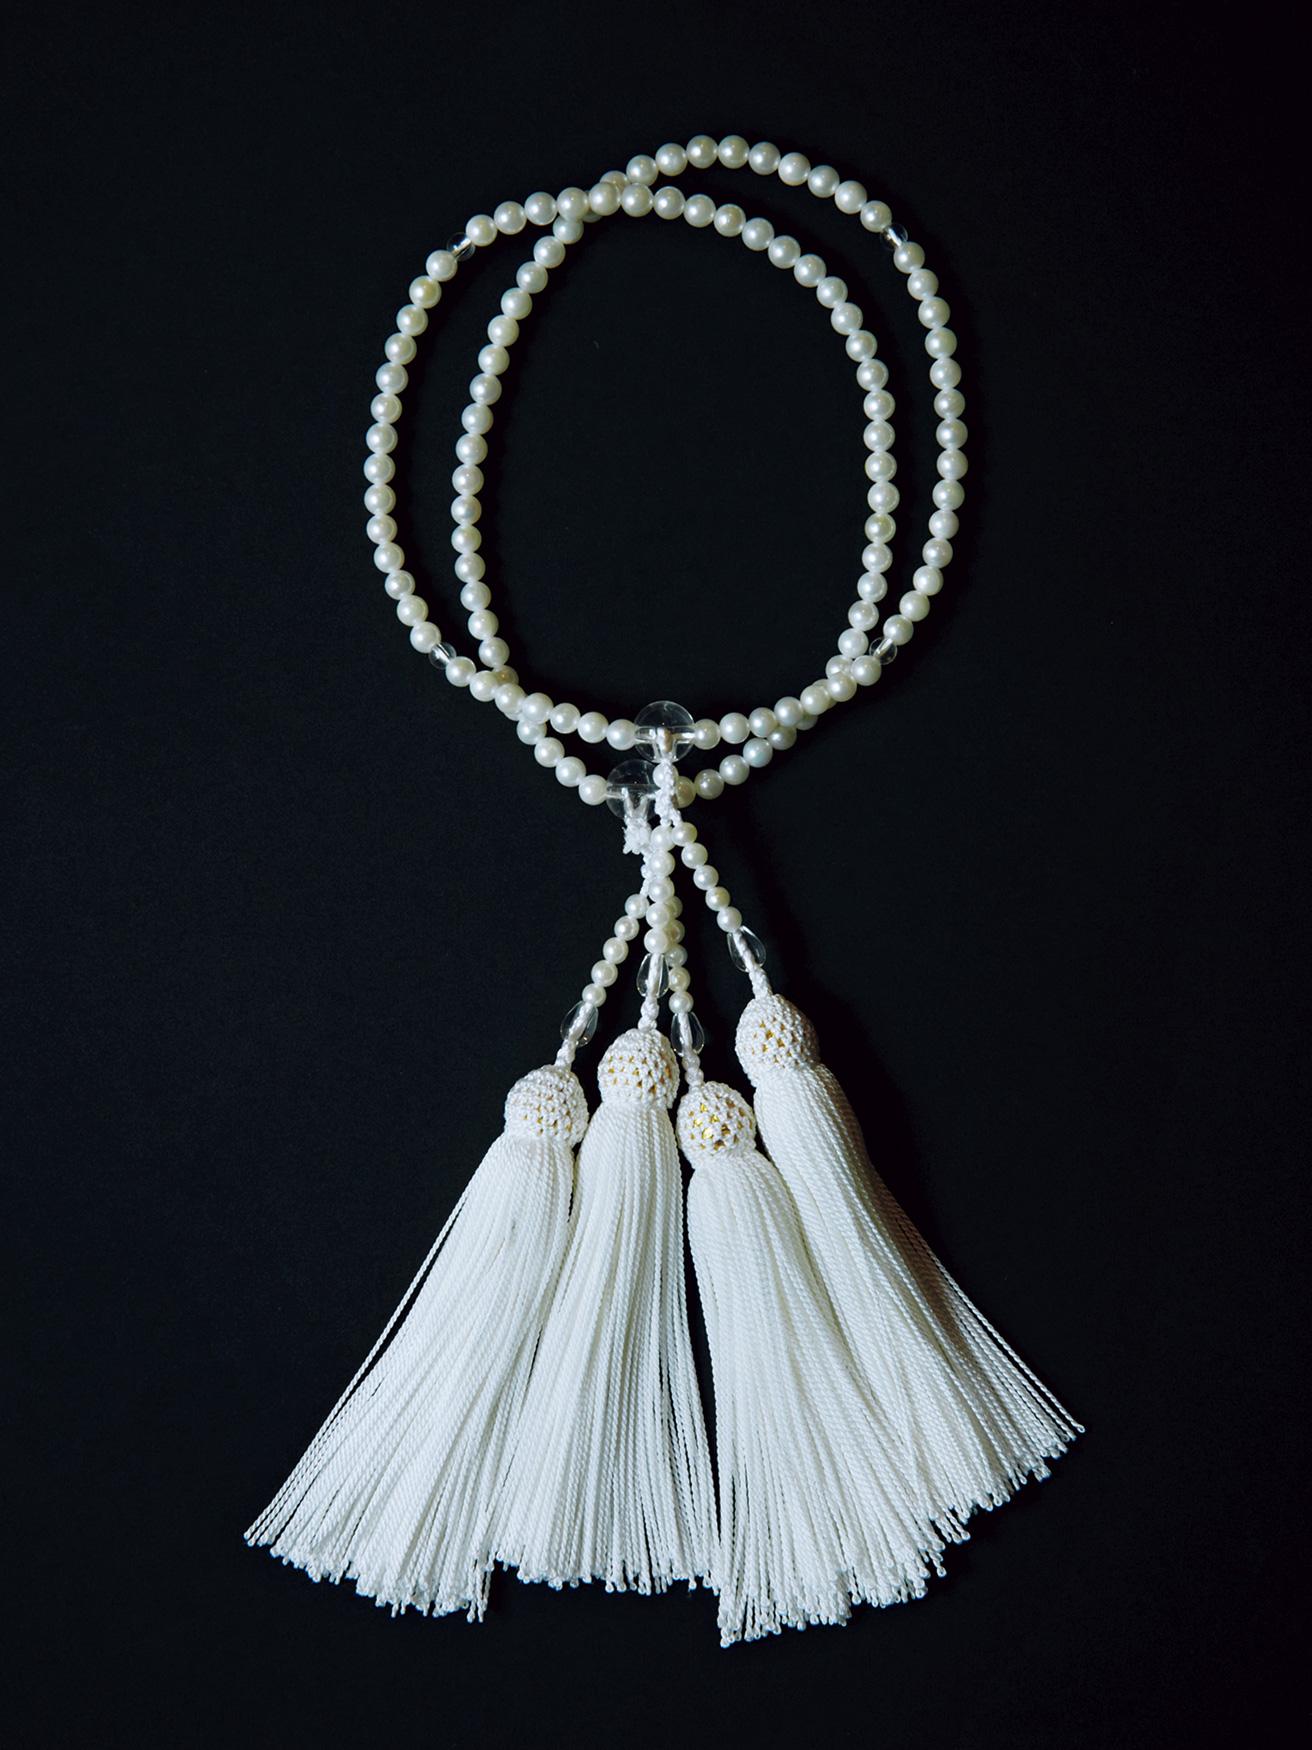 Purchase No. 53【真珠の念珠】108の珠をつなげる美しい祈りの形。